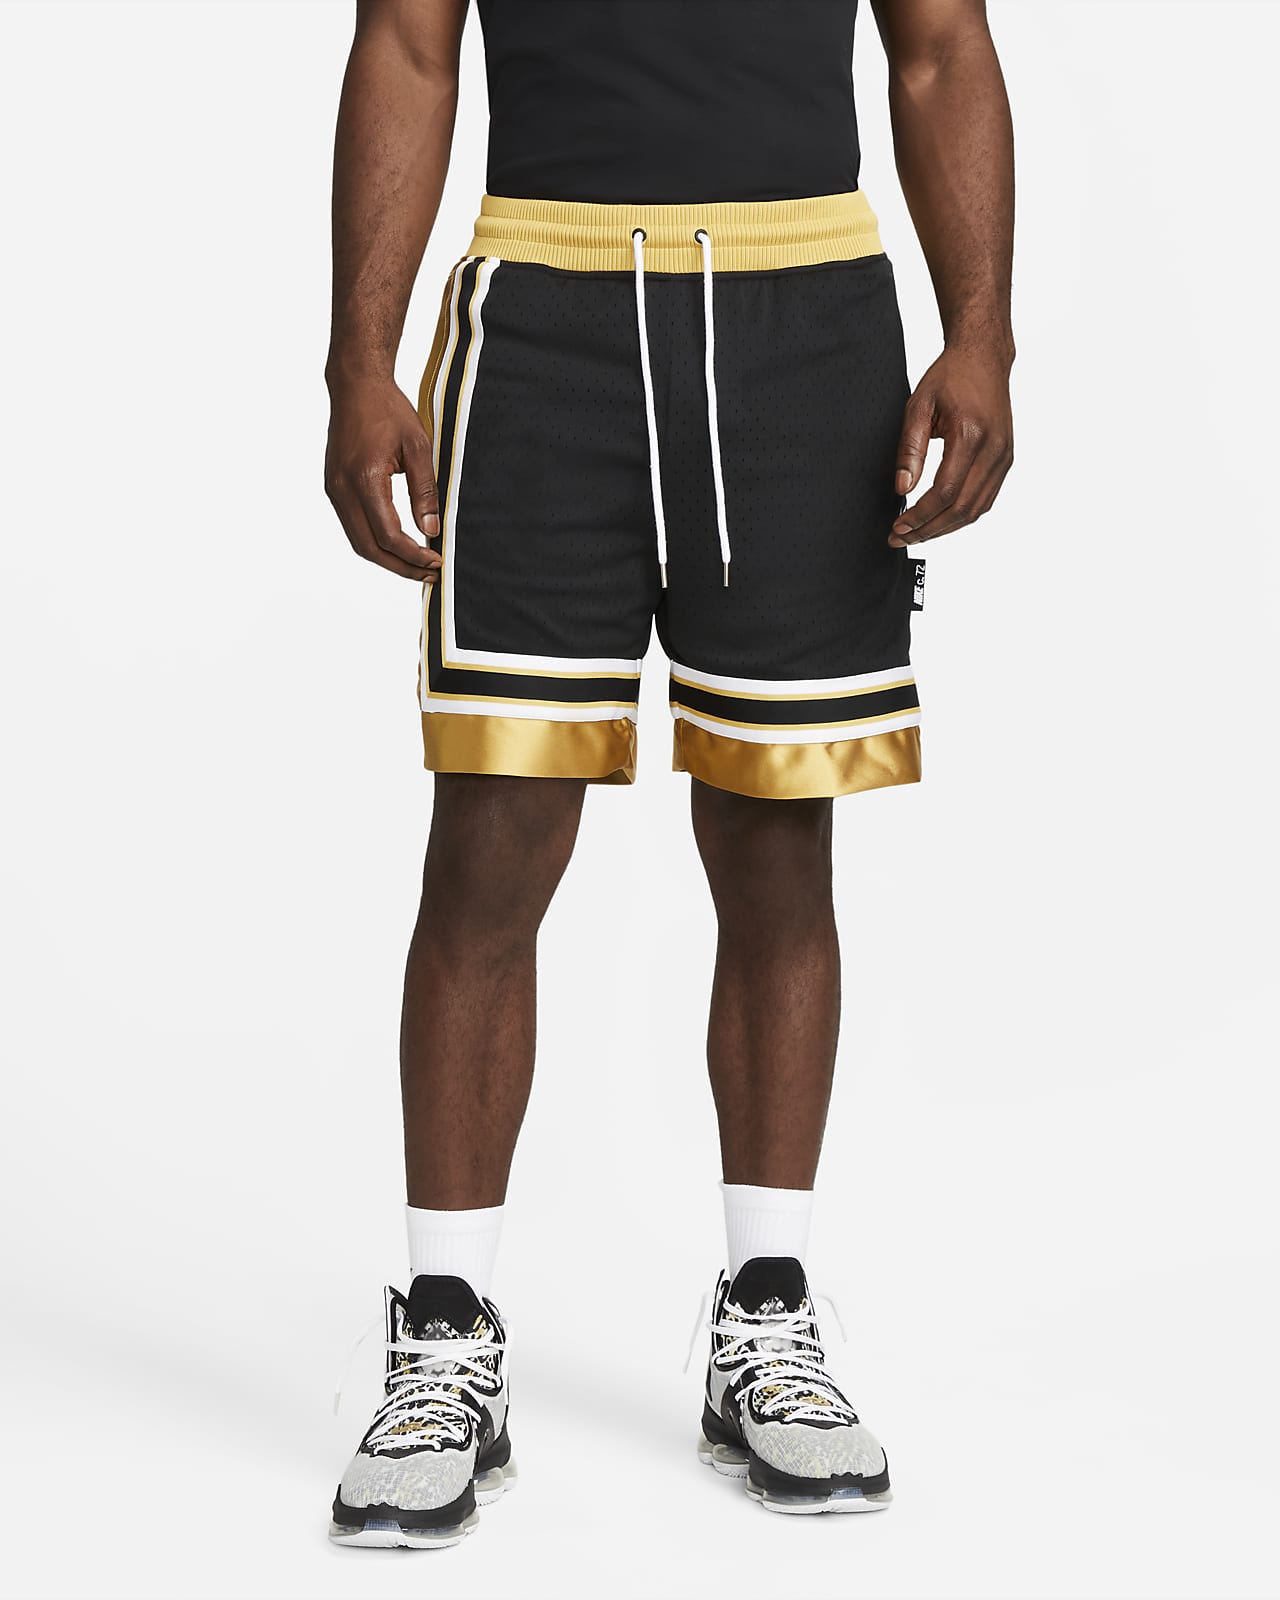 Mens Nike Basketball Shorts On Sale | escapeauthority.com